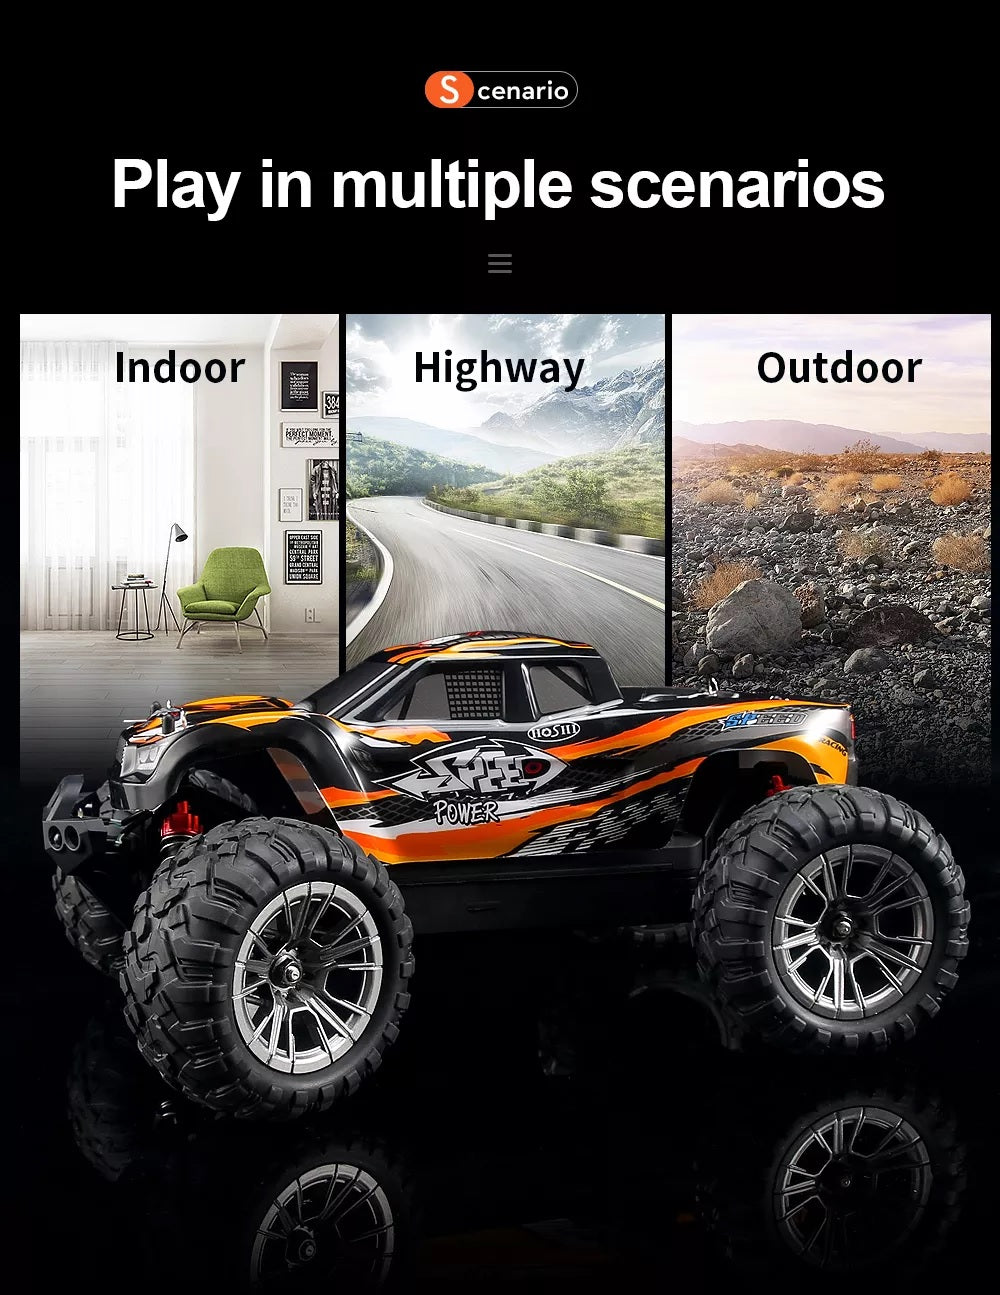 ISPEKTRUM N416 High Speed RC Car - ISPEKTRUM Toys & Games